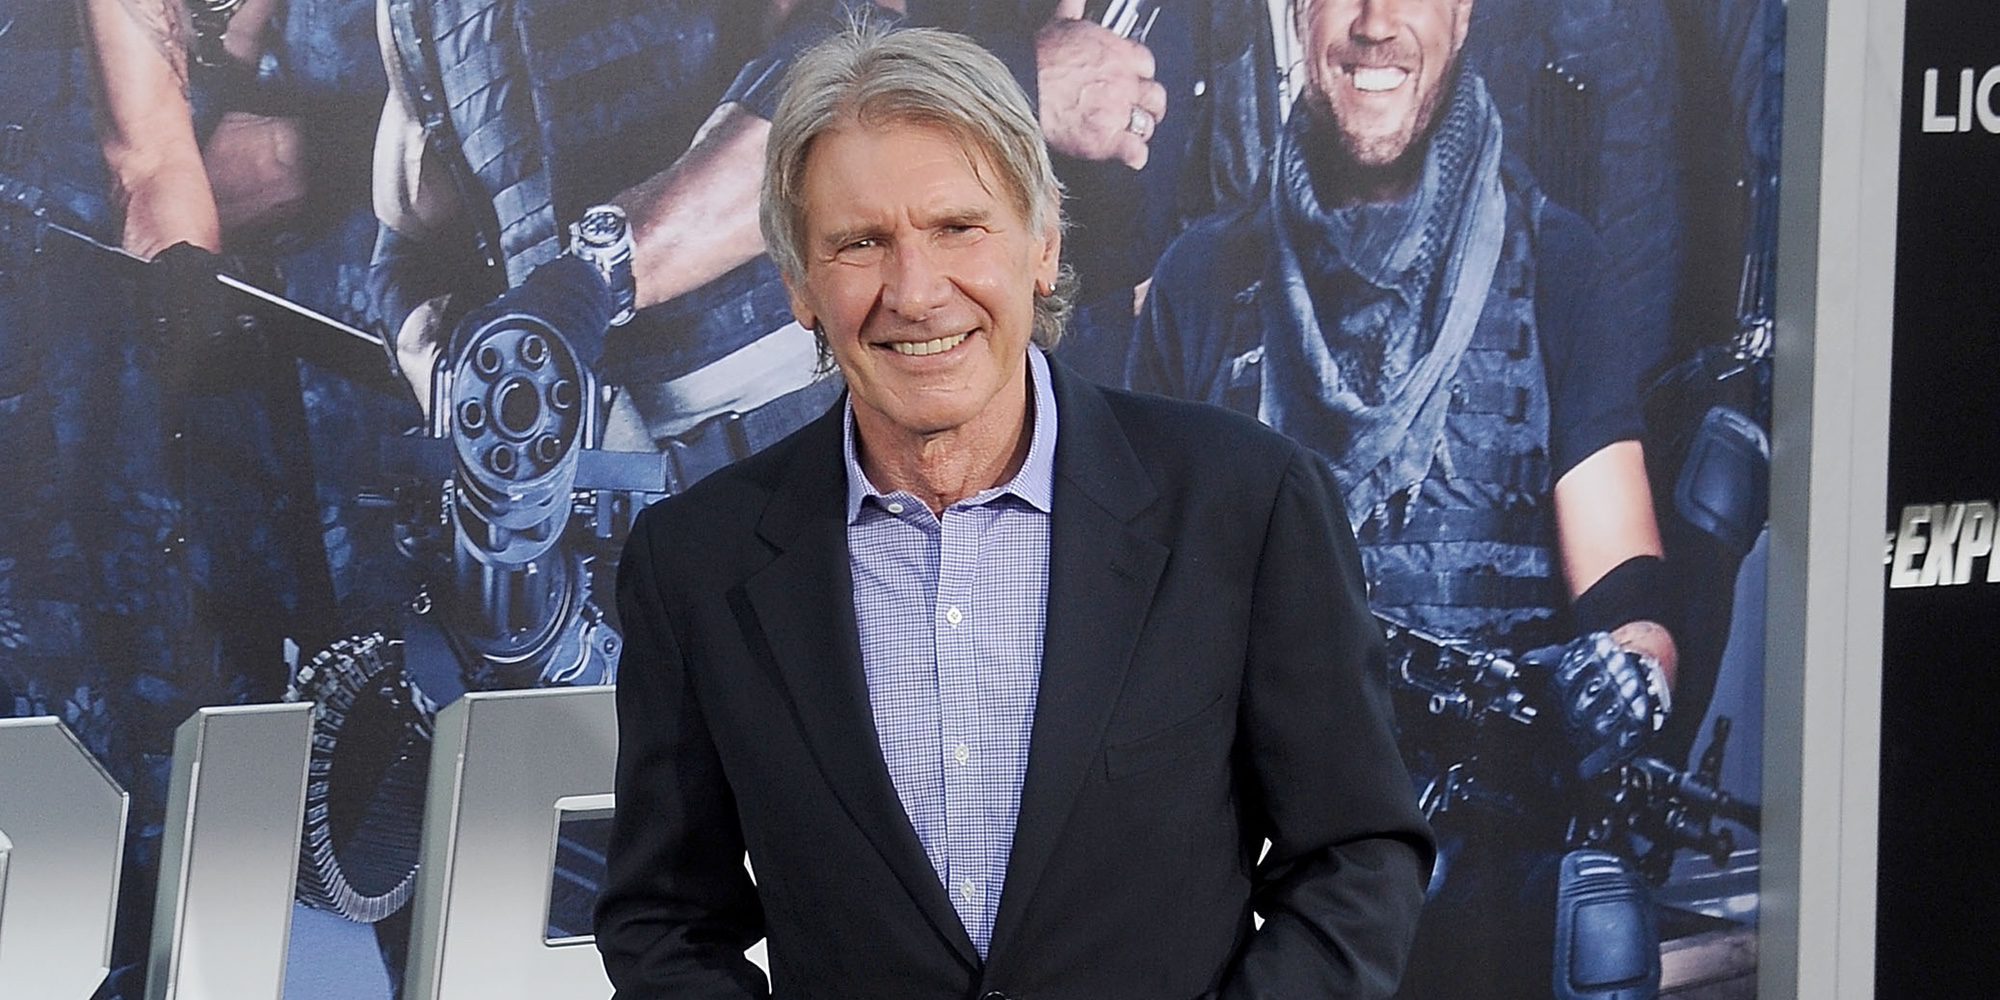 Harrison Ford habla por primera vez sobre el romance que tuvo con Carrie Fisher